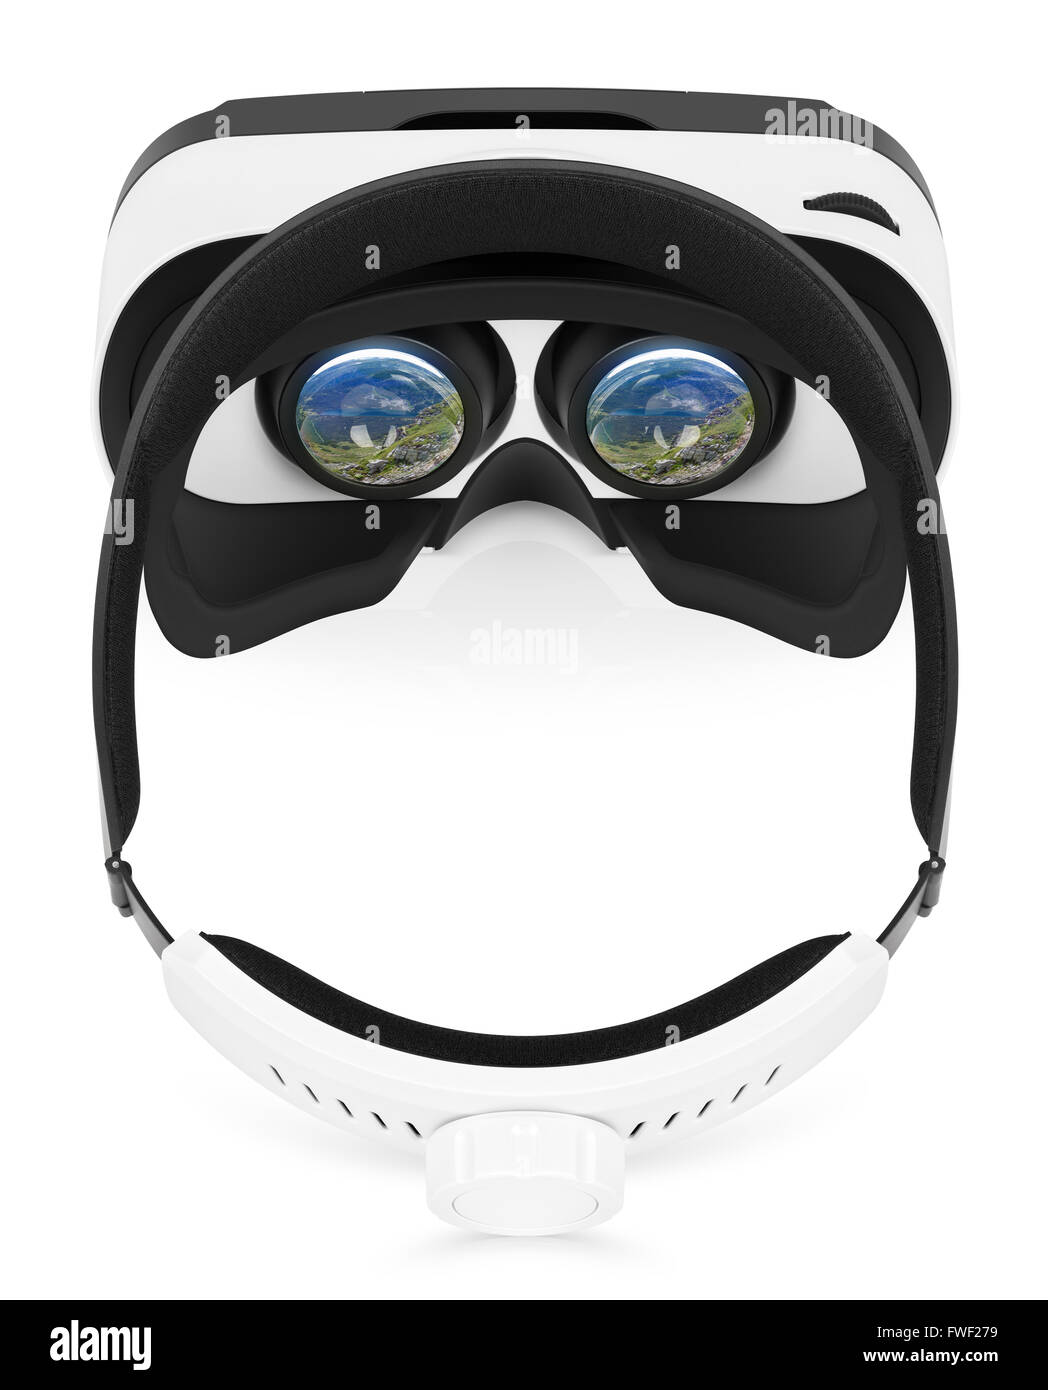 Giroscopio de realidad virtual fotografías e imágenes de alta resolución -  Alamy